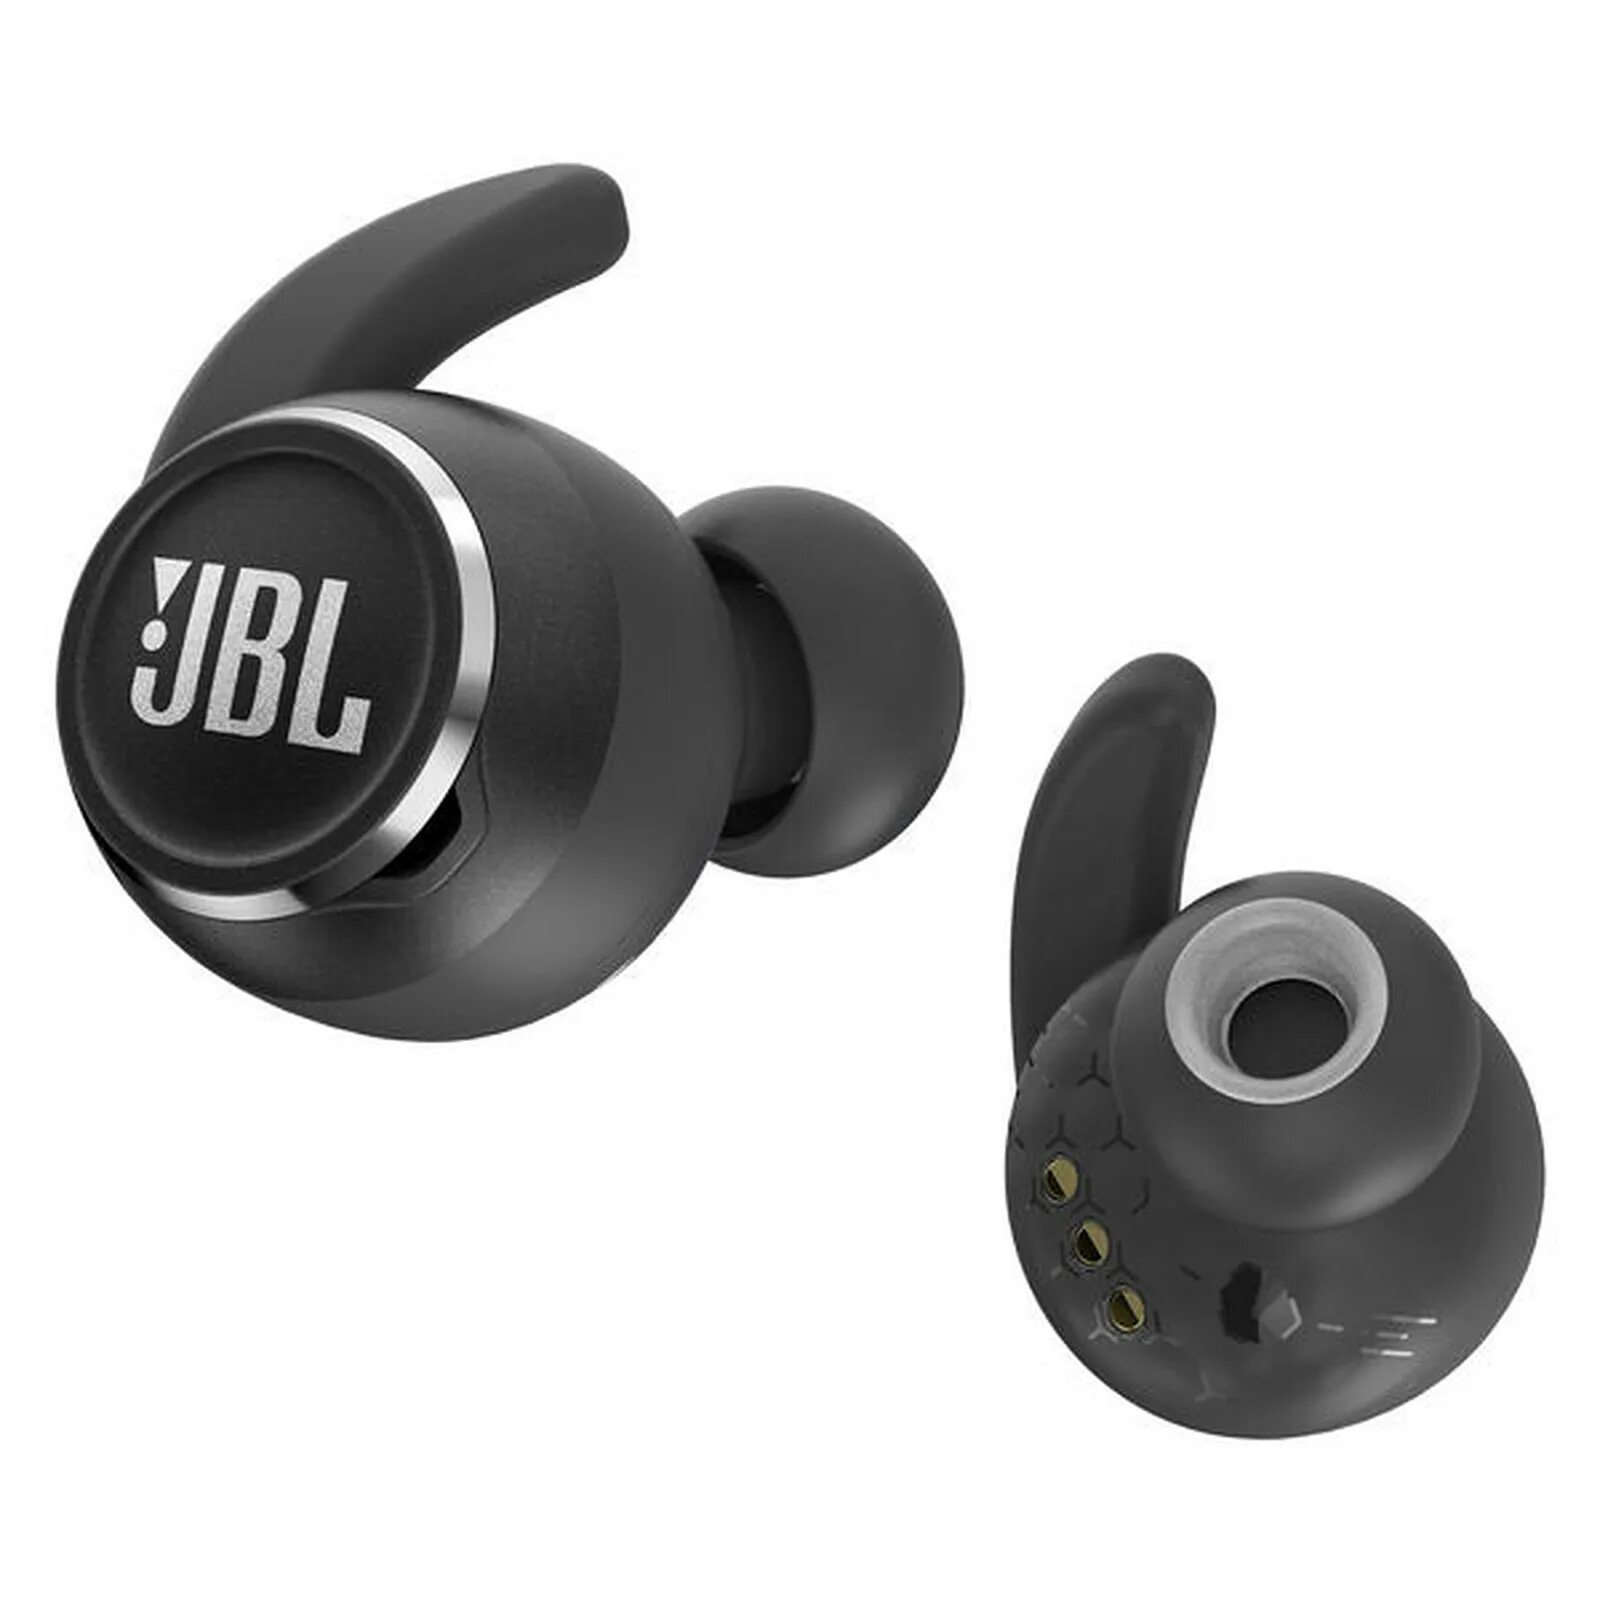 Наушники JBL reflect Mini. Беспроводные наушники JBL TWS. Беспроводные наушники JBL reflect Mini NC,черный. Wireless Earbuds беспроводные наушники JBL.